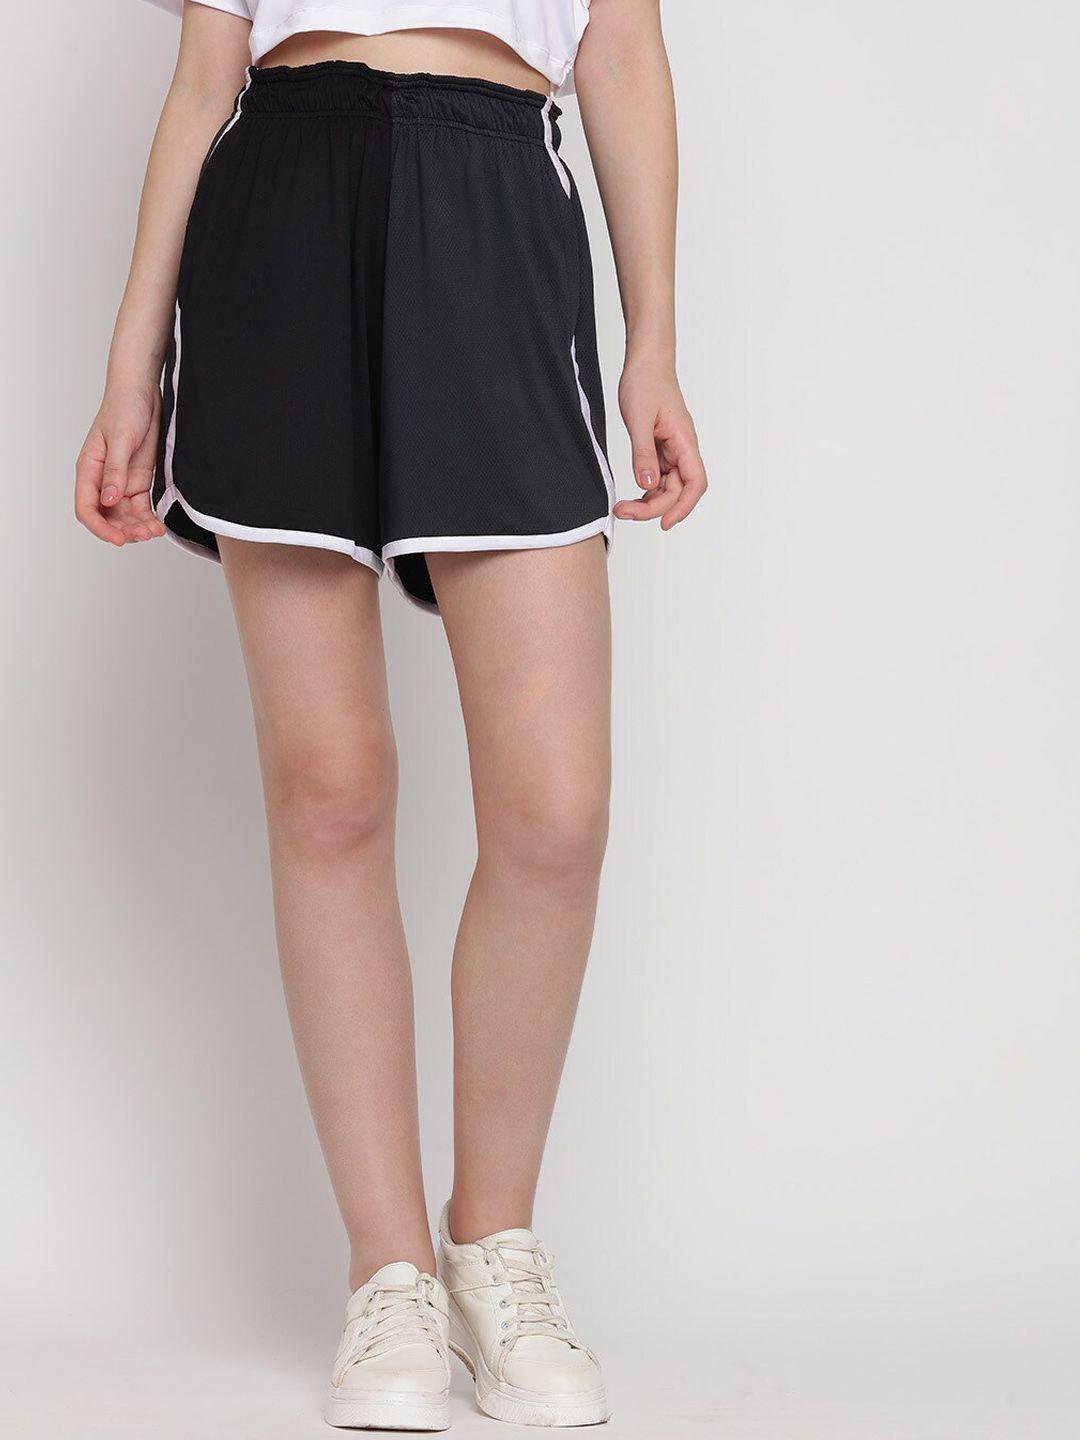 wearjukebox women high-rise regular shorts